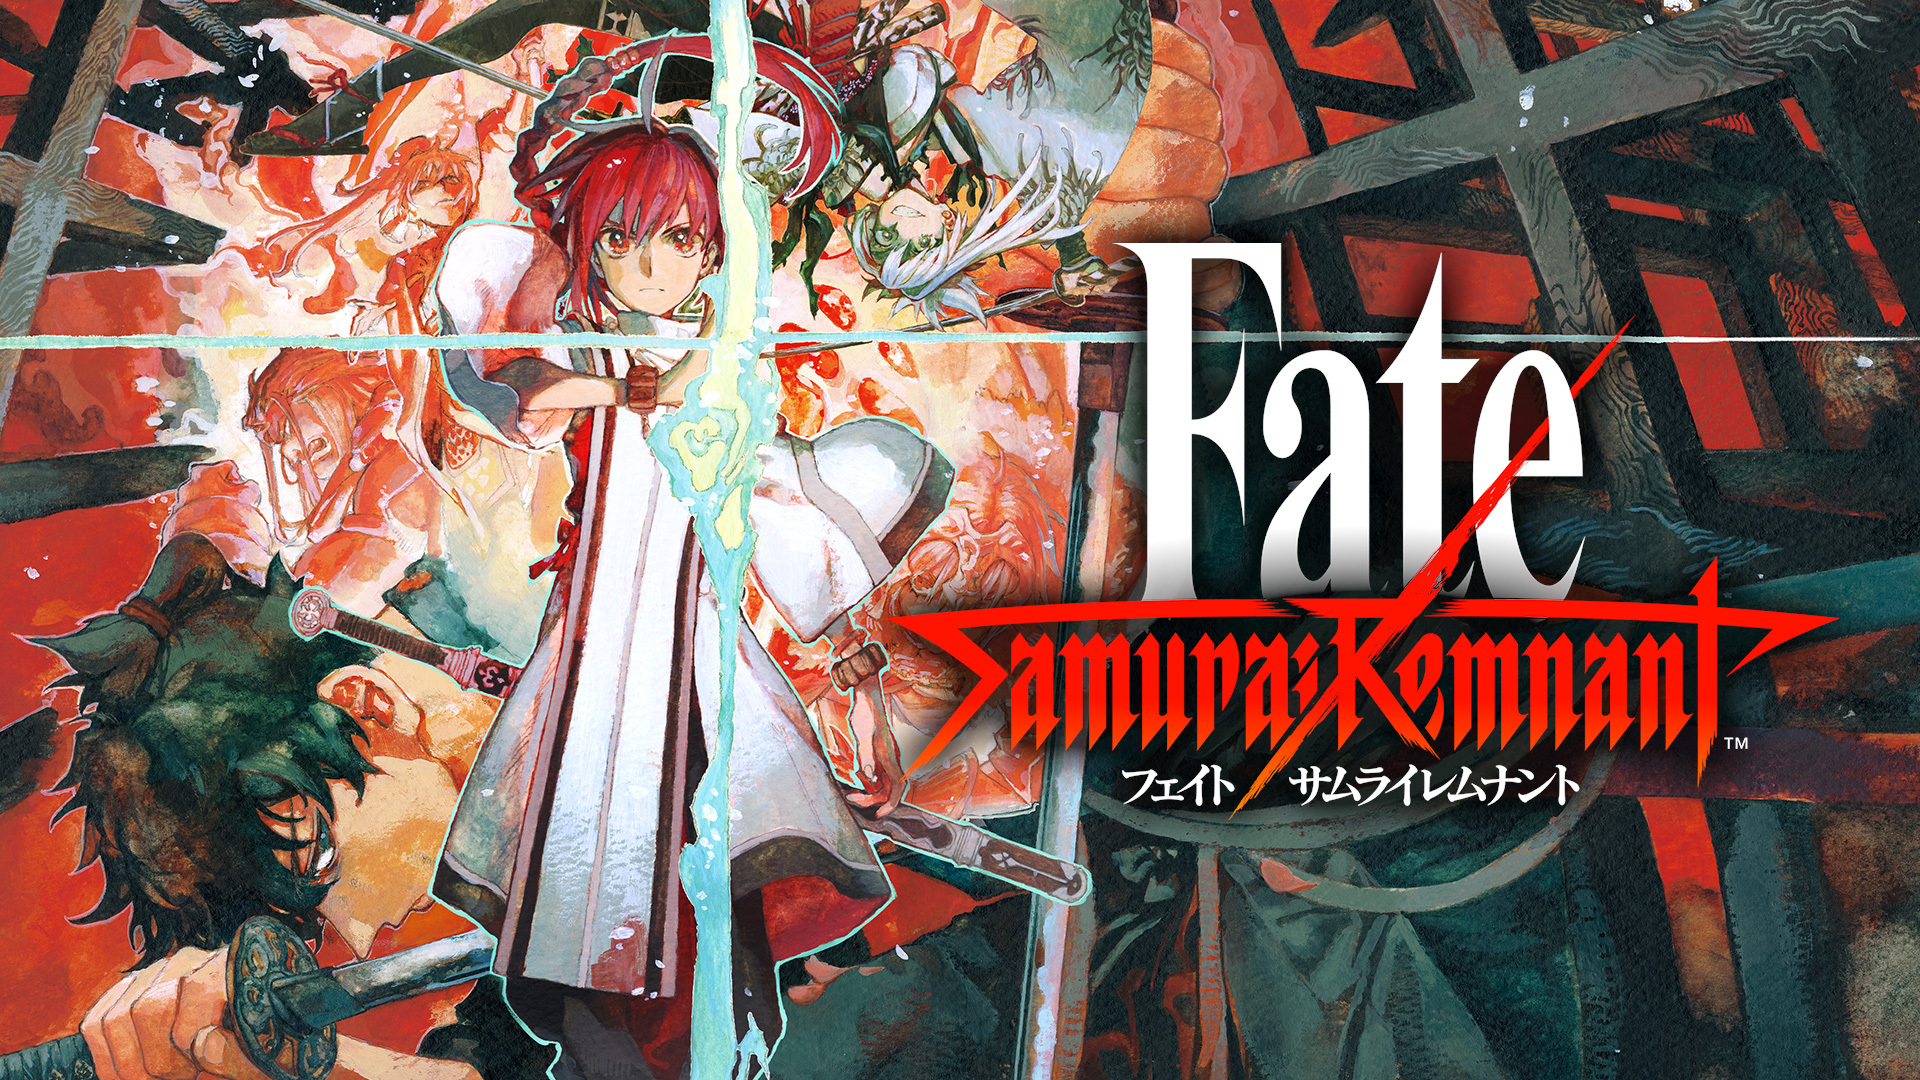 Fate/Samurai Remnant launches September 28 in Japan, September 29